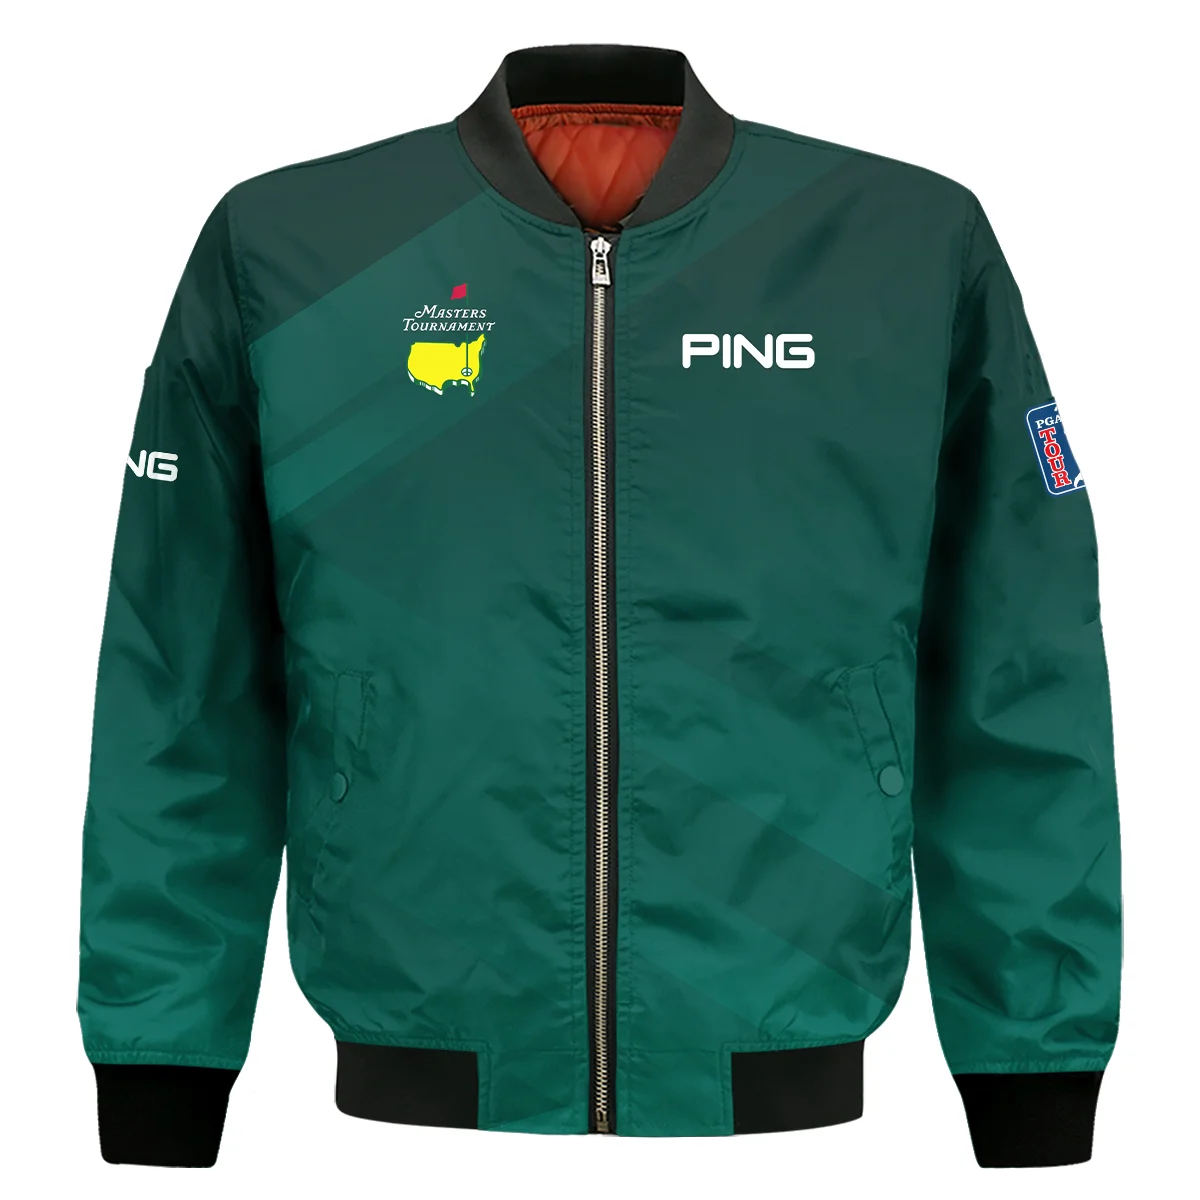 Masters Tournament Dark Green Gradient Golf Sport Ping Style Classic Quarter Zipped Sweatshirt